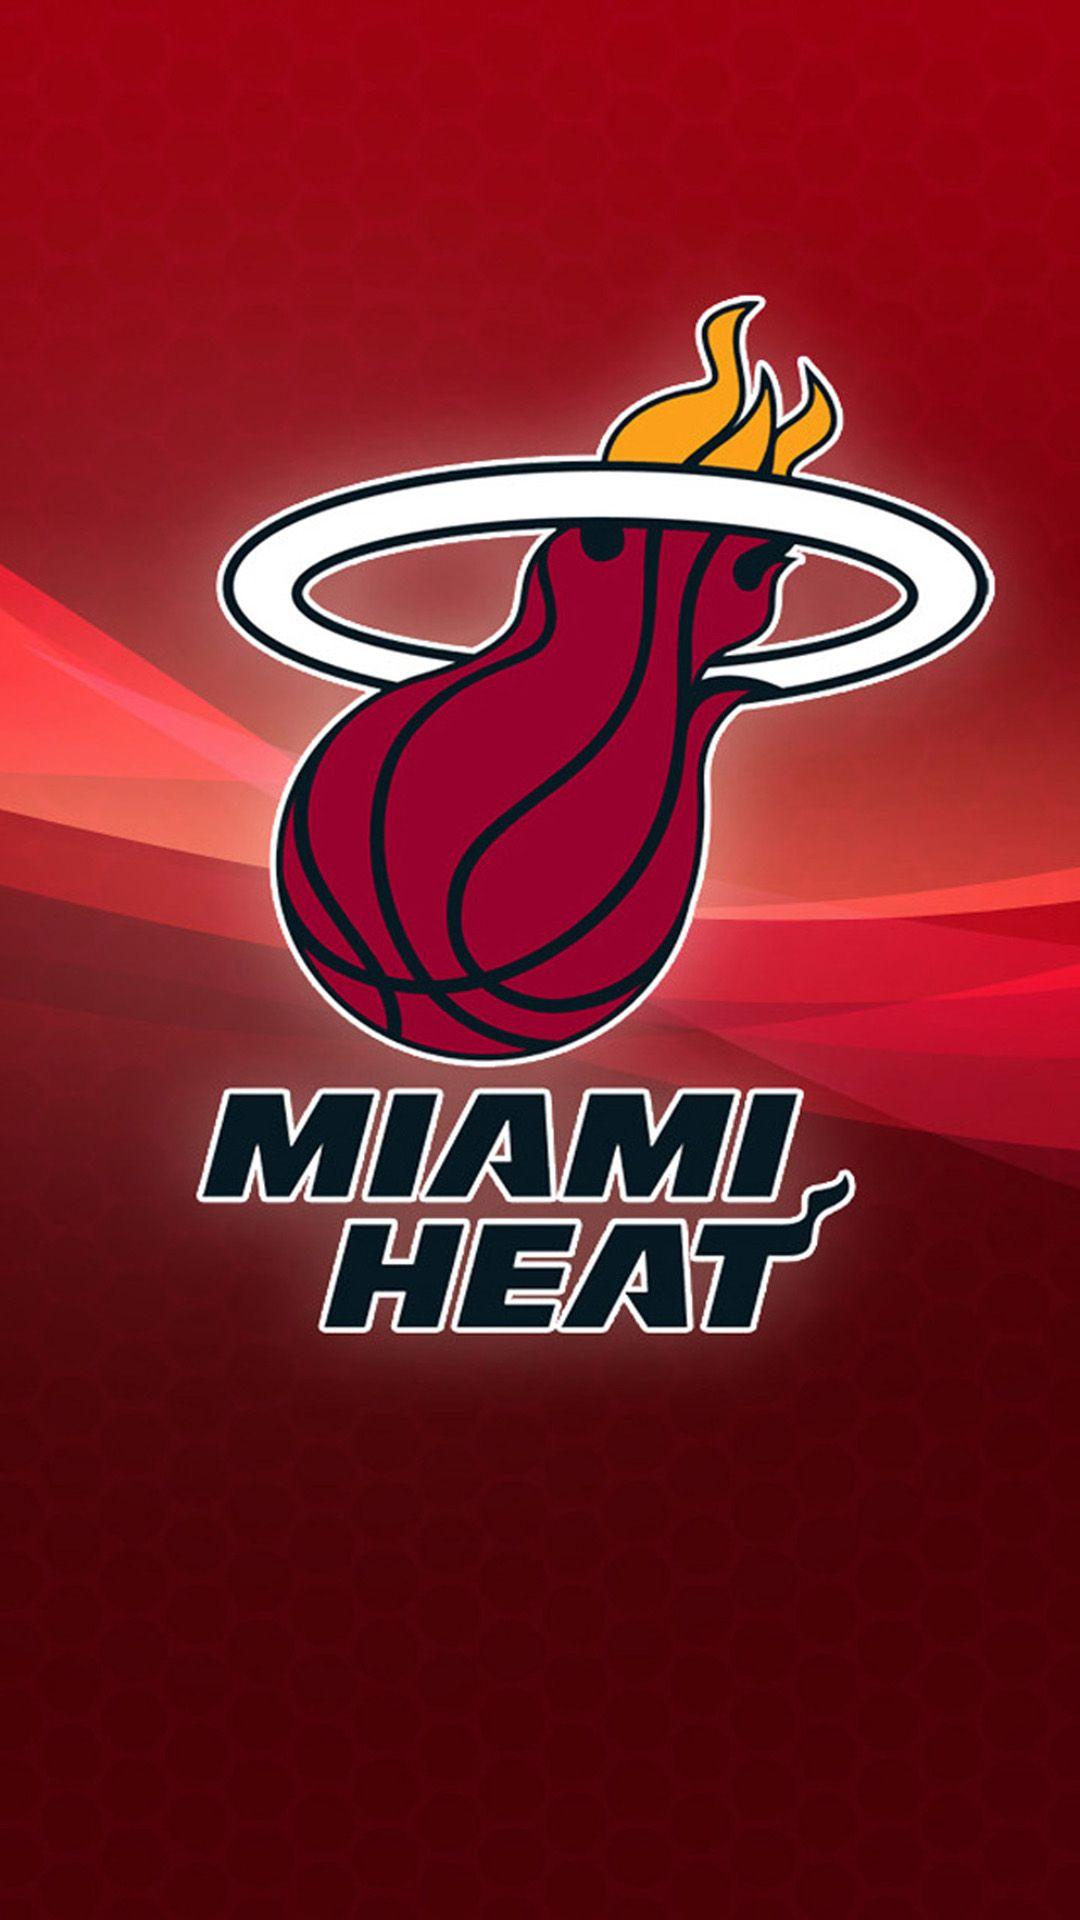 Miami Heat NBA Wallpaper for Galaxy S5